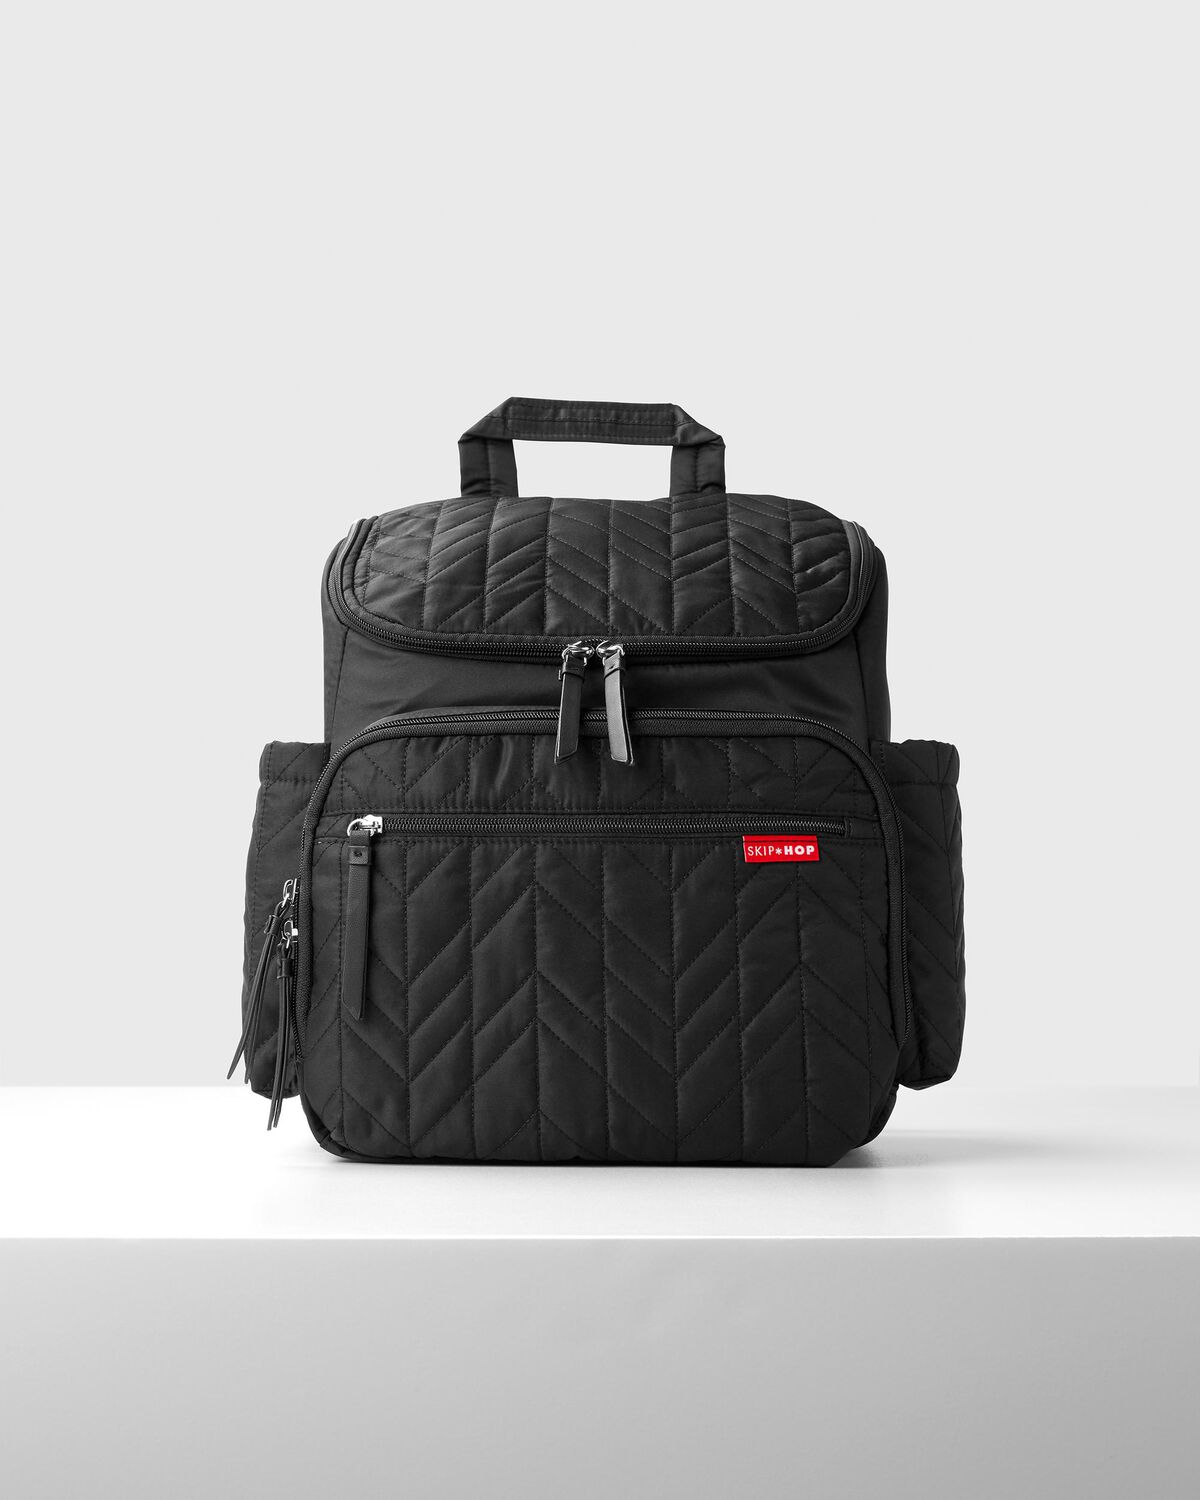 Black Forma Backpack Diaper Bag | carters.com